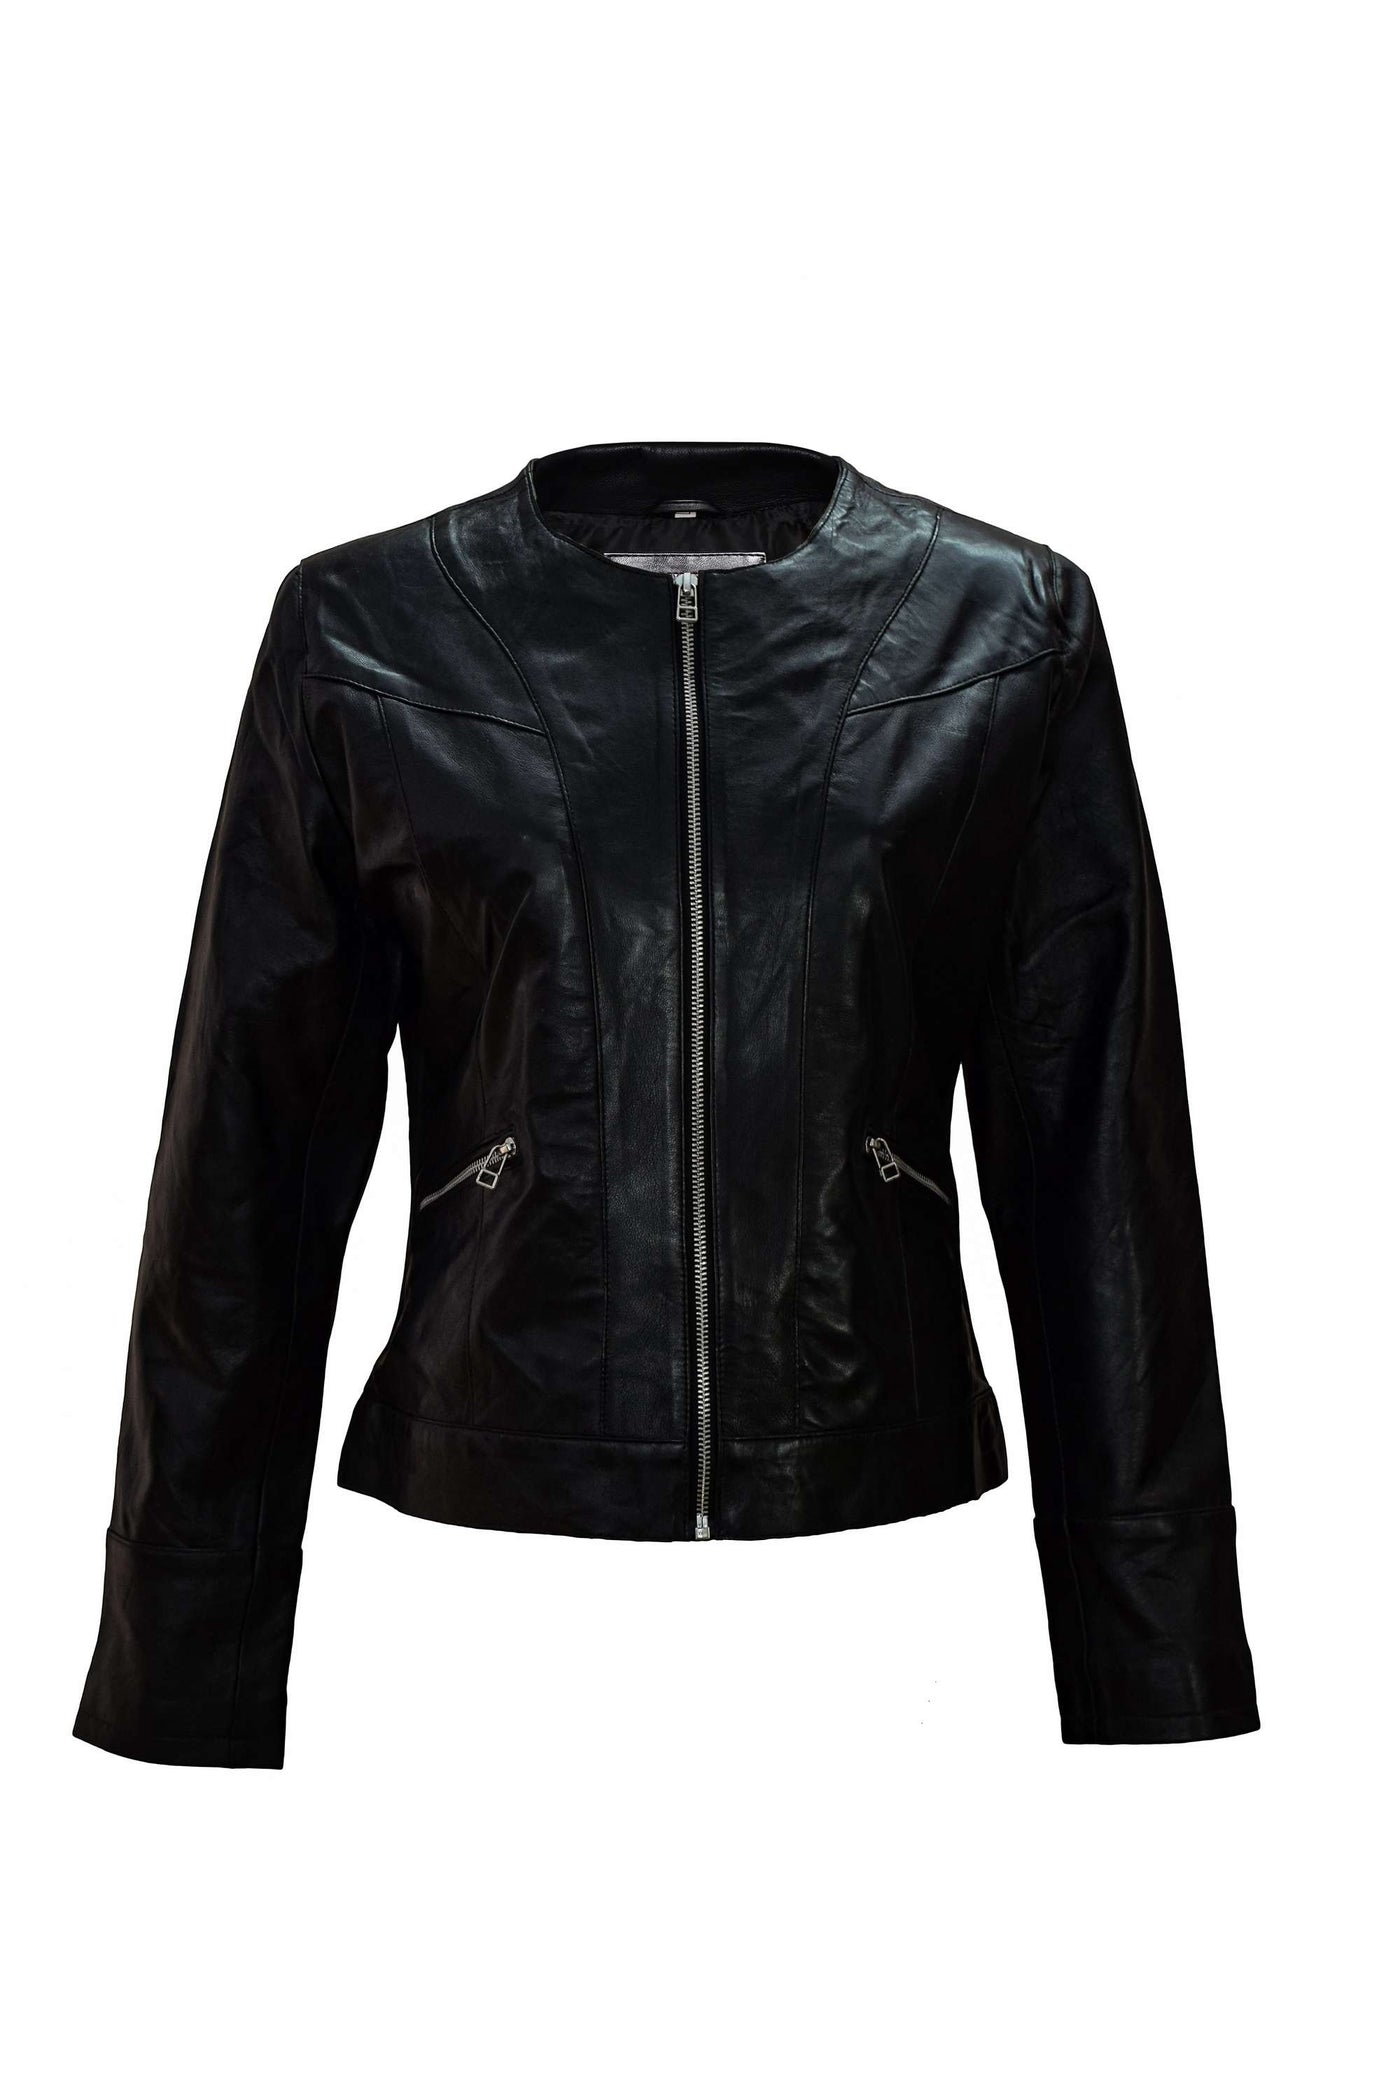 Symmetric Black Leather Jacket